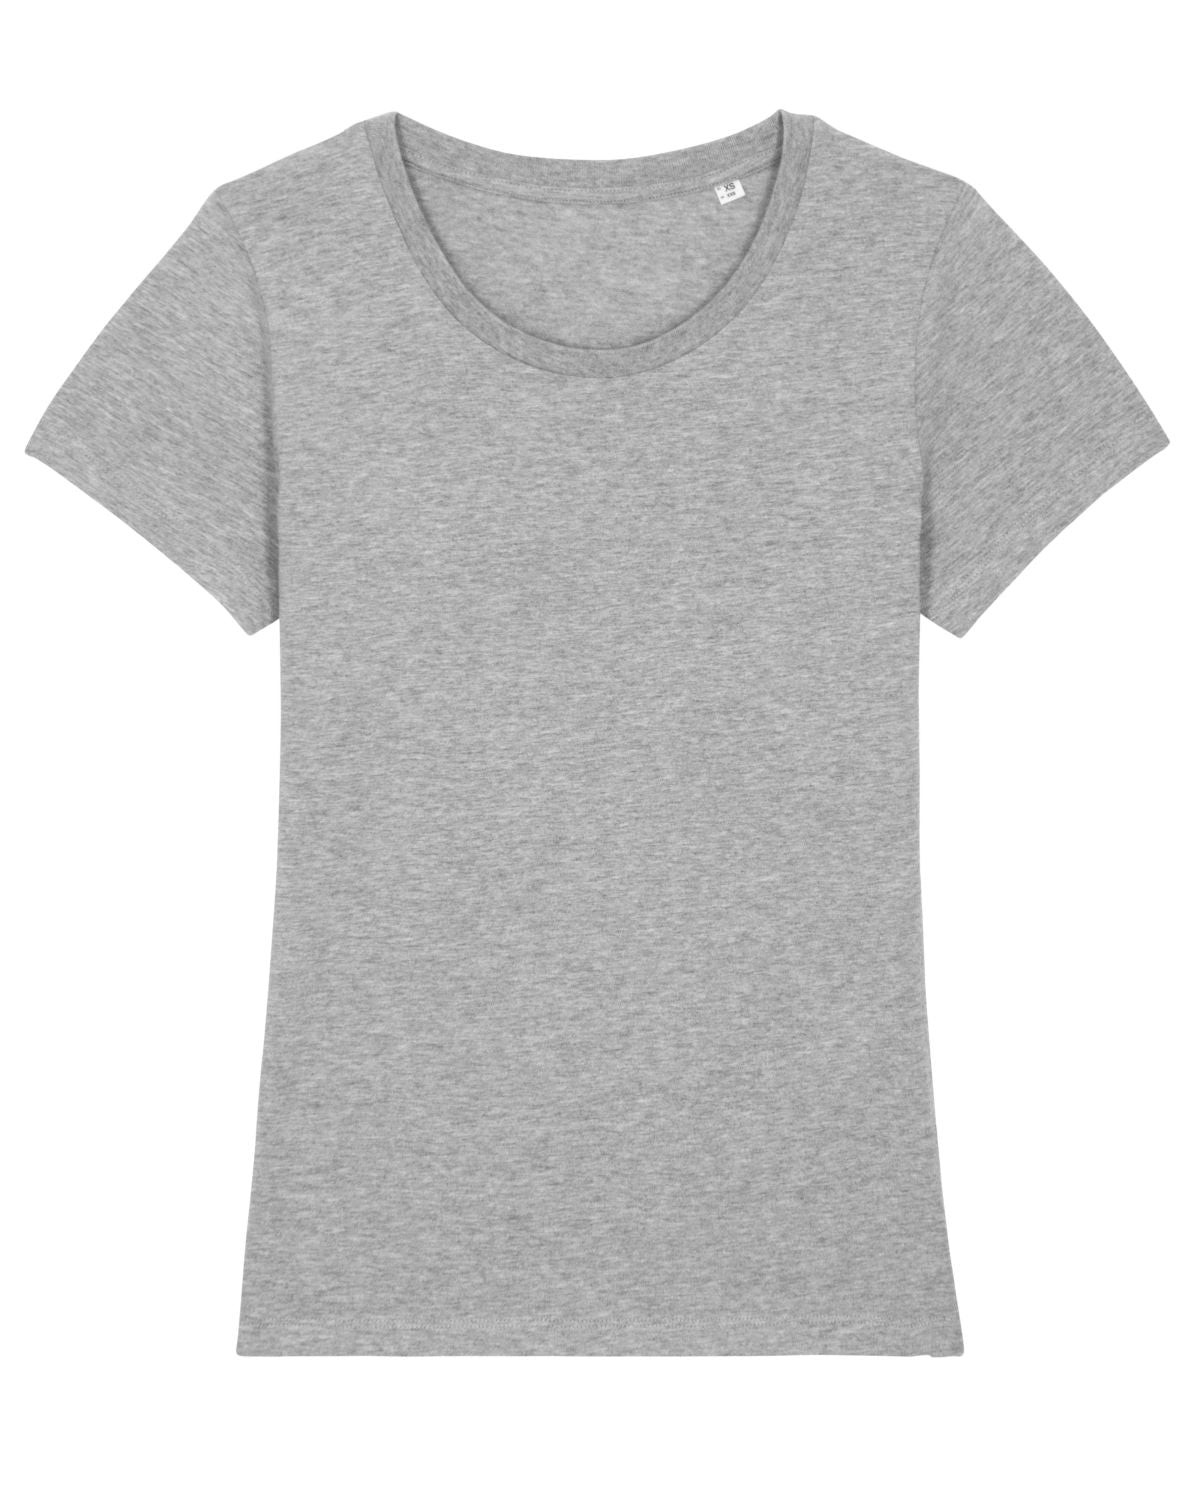 EXPRESSER - t-shirt coton bio femme